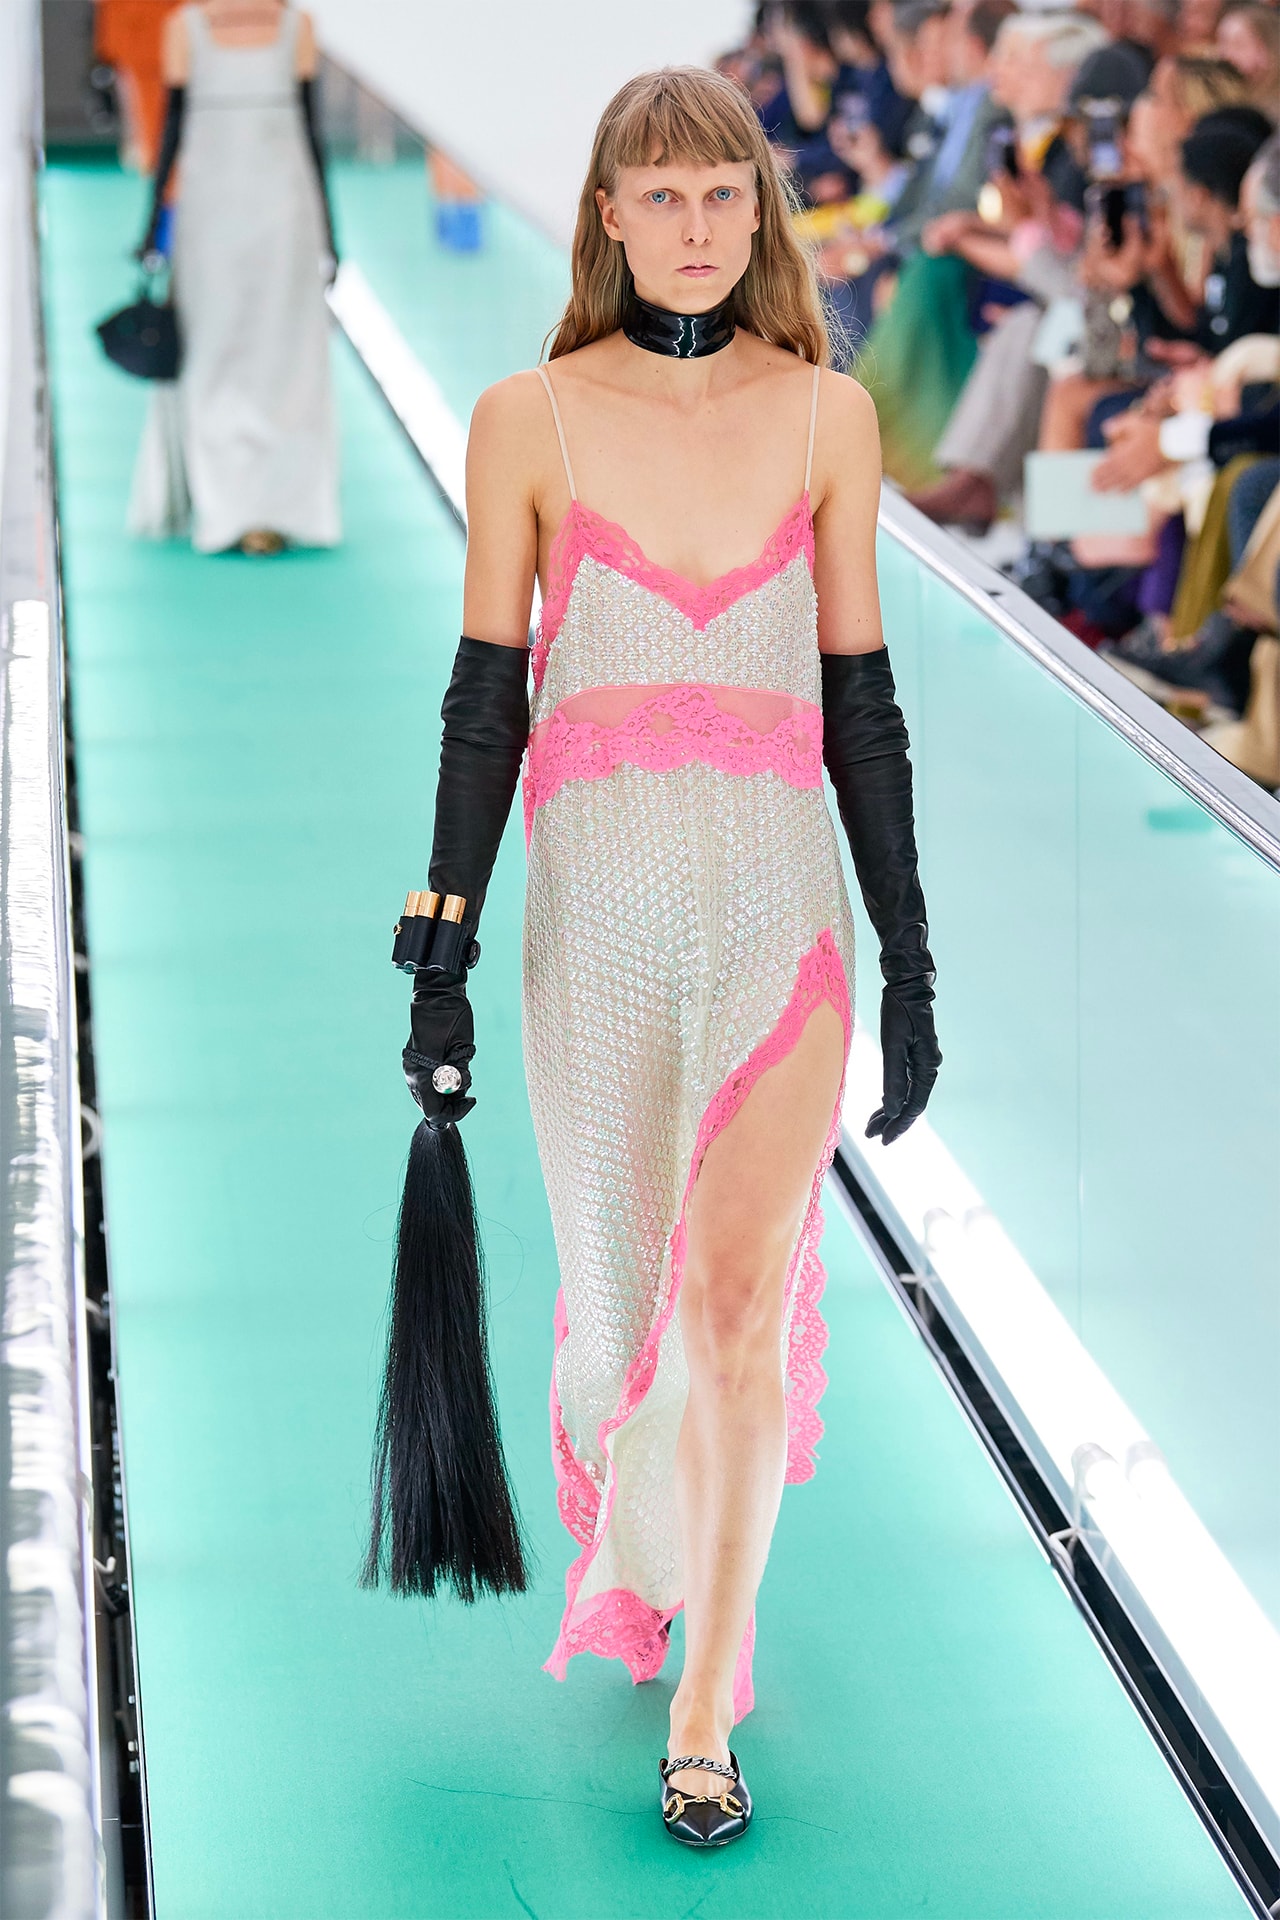 Gucci Orgasmique Spring Summer 2020 Runway Show Milan Fashion Week SS20 lace dress pink flogger whip